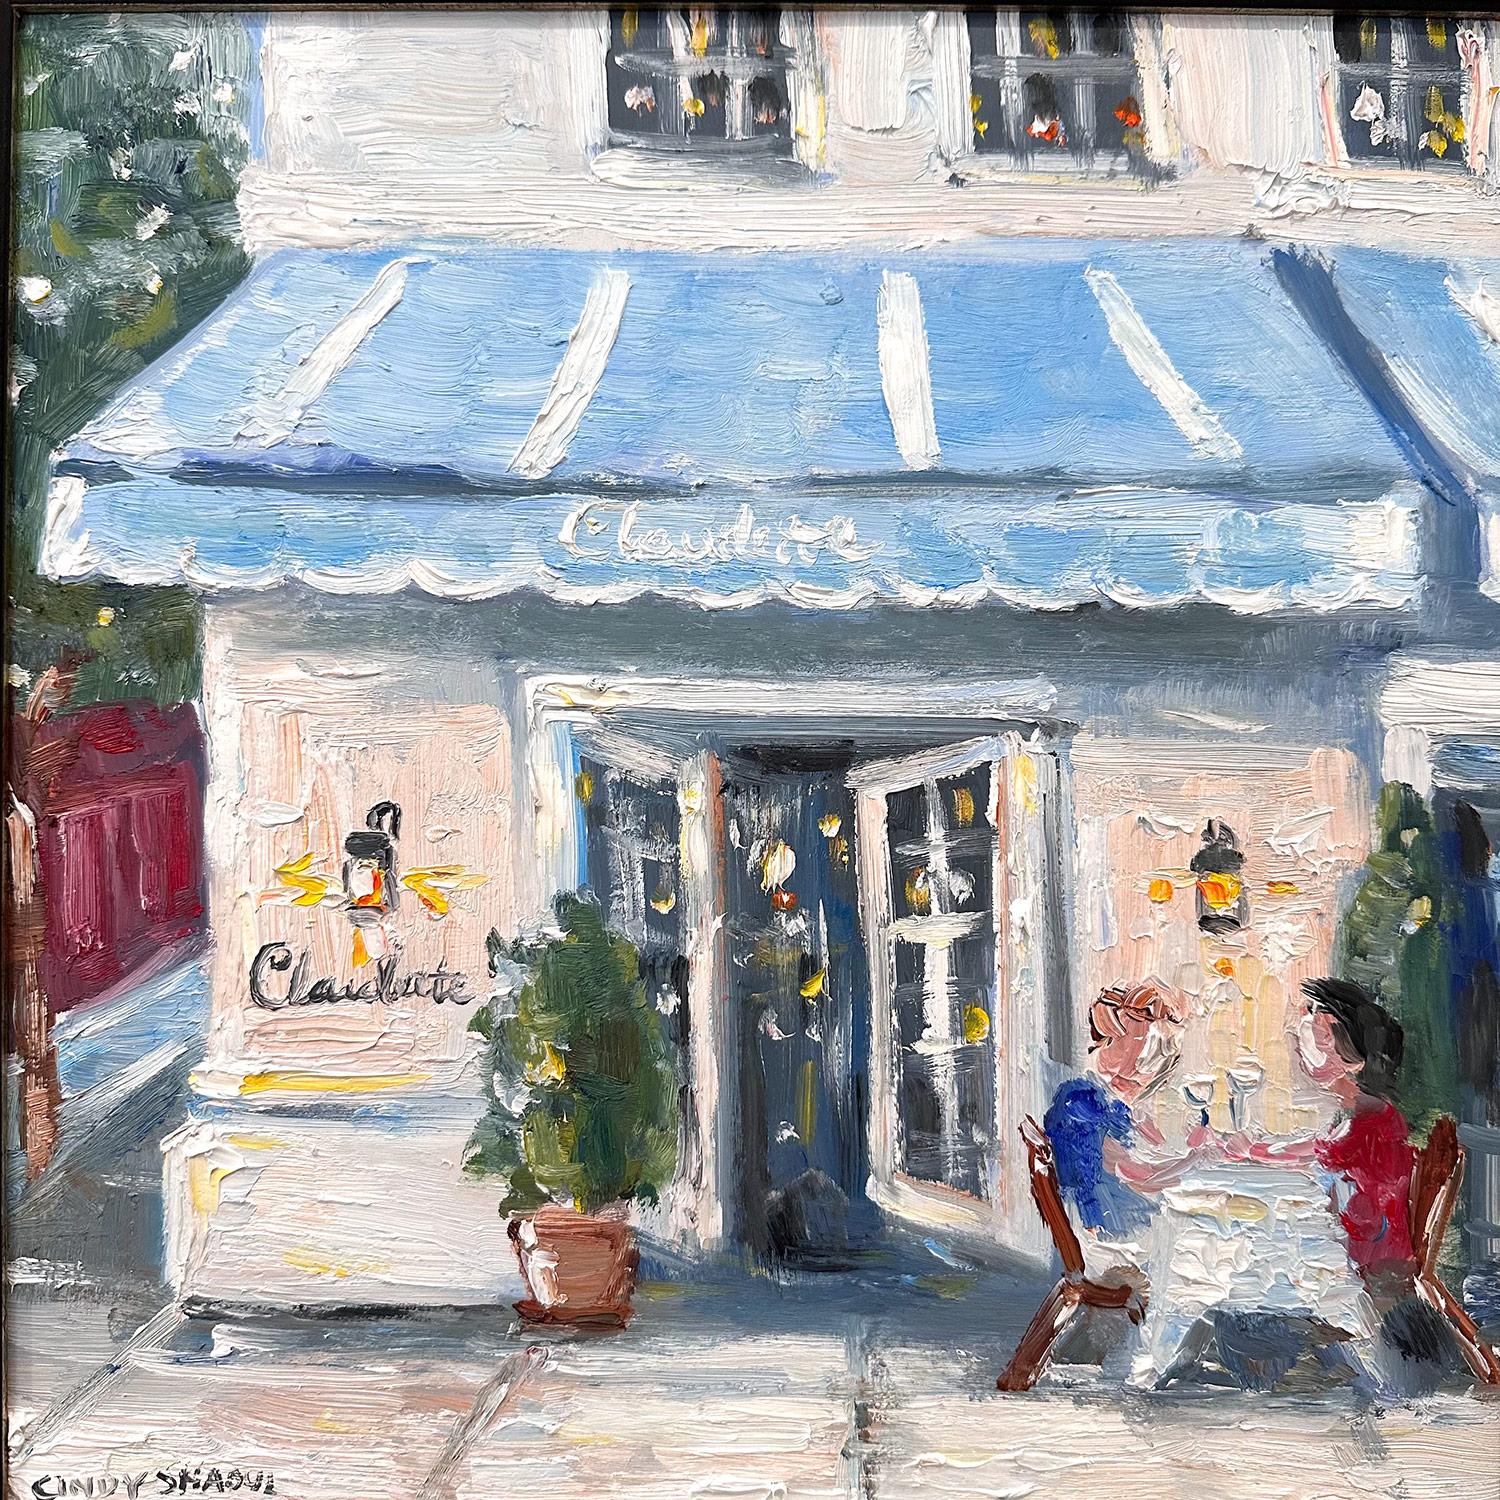 „Brunch at Claudette“ Plein Air Restaurant, Ölgemälde, 5th Avenue, New York City – Painting von Cindy Shaoul